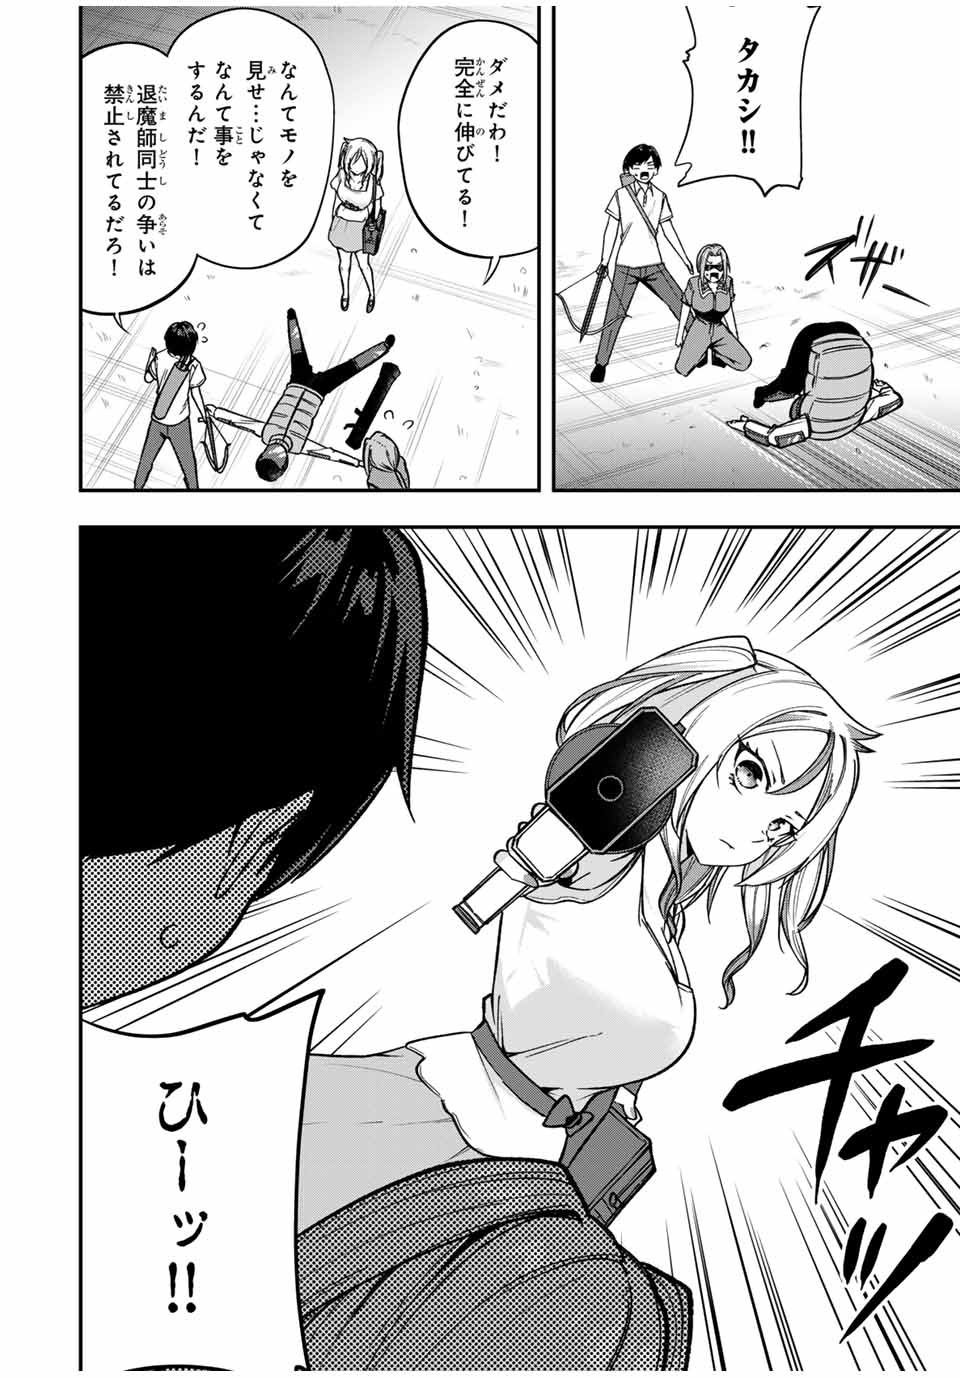 Heroine wa xx Okasegitai - Chapter 6 - Page 2